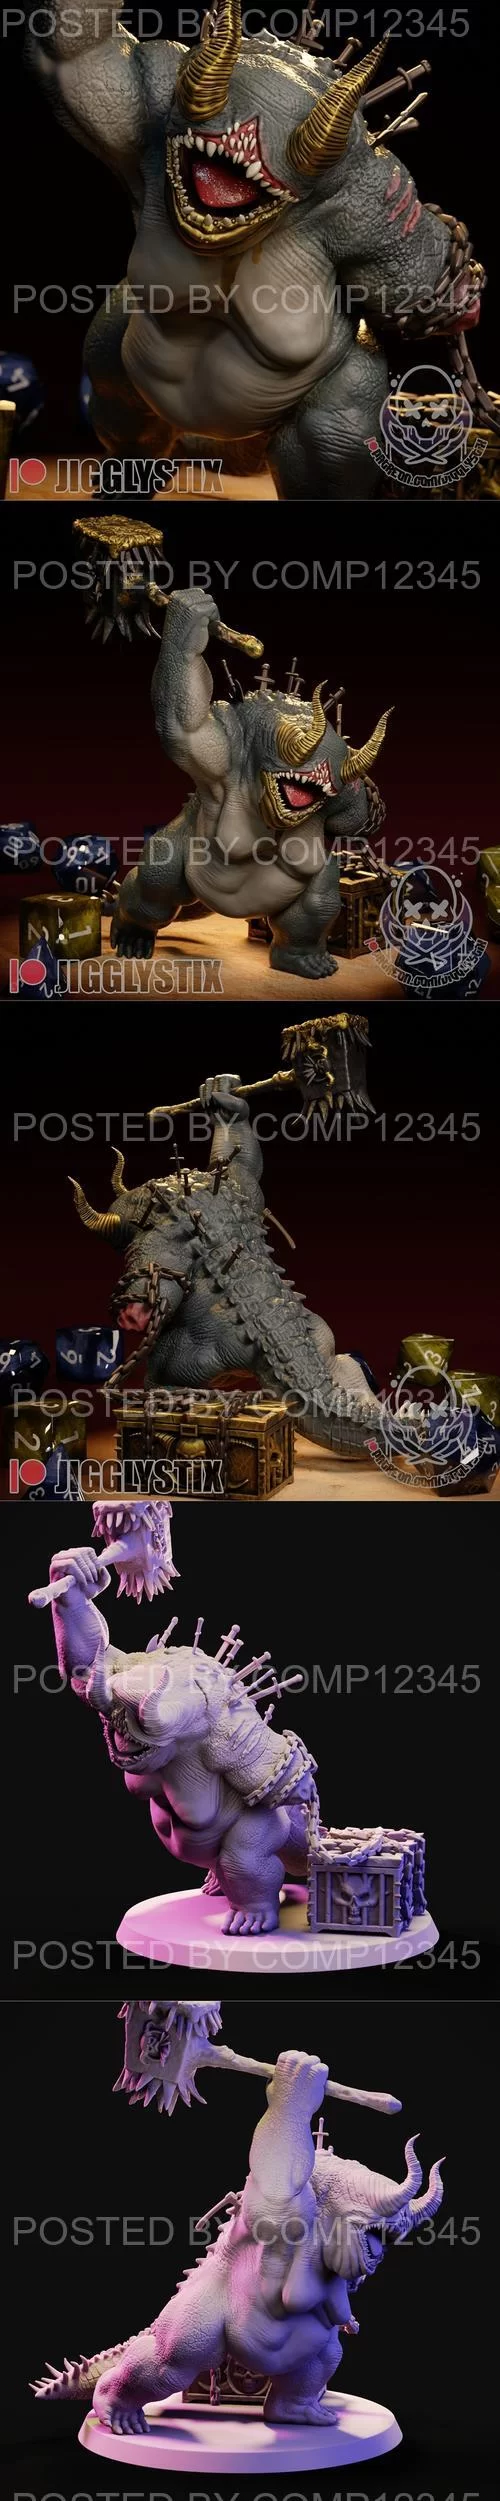 Jigglystix - Gold Afflicted Demon